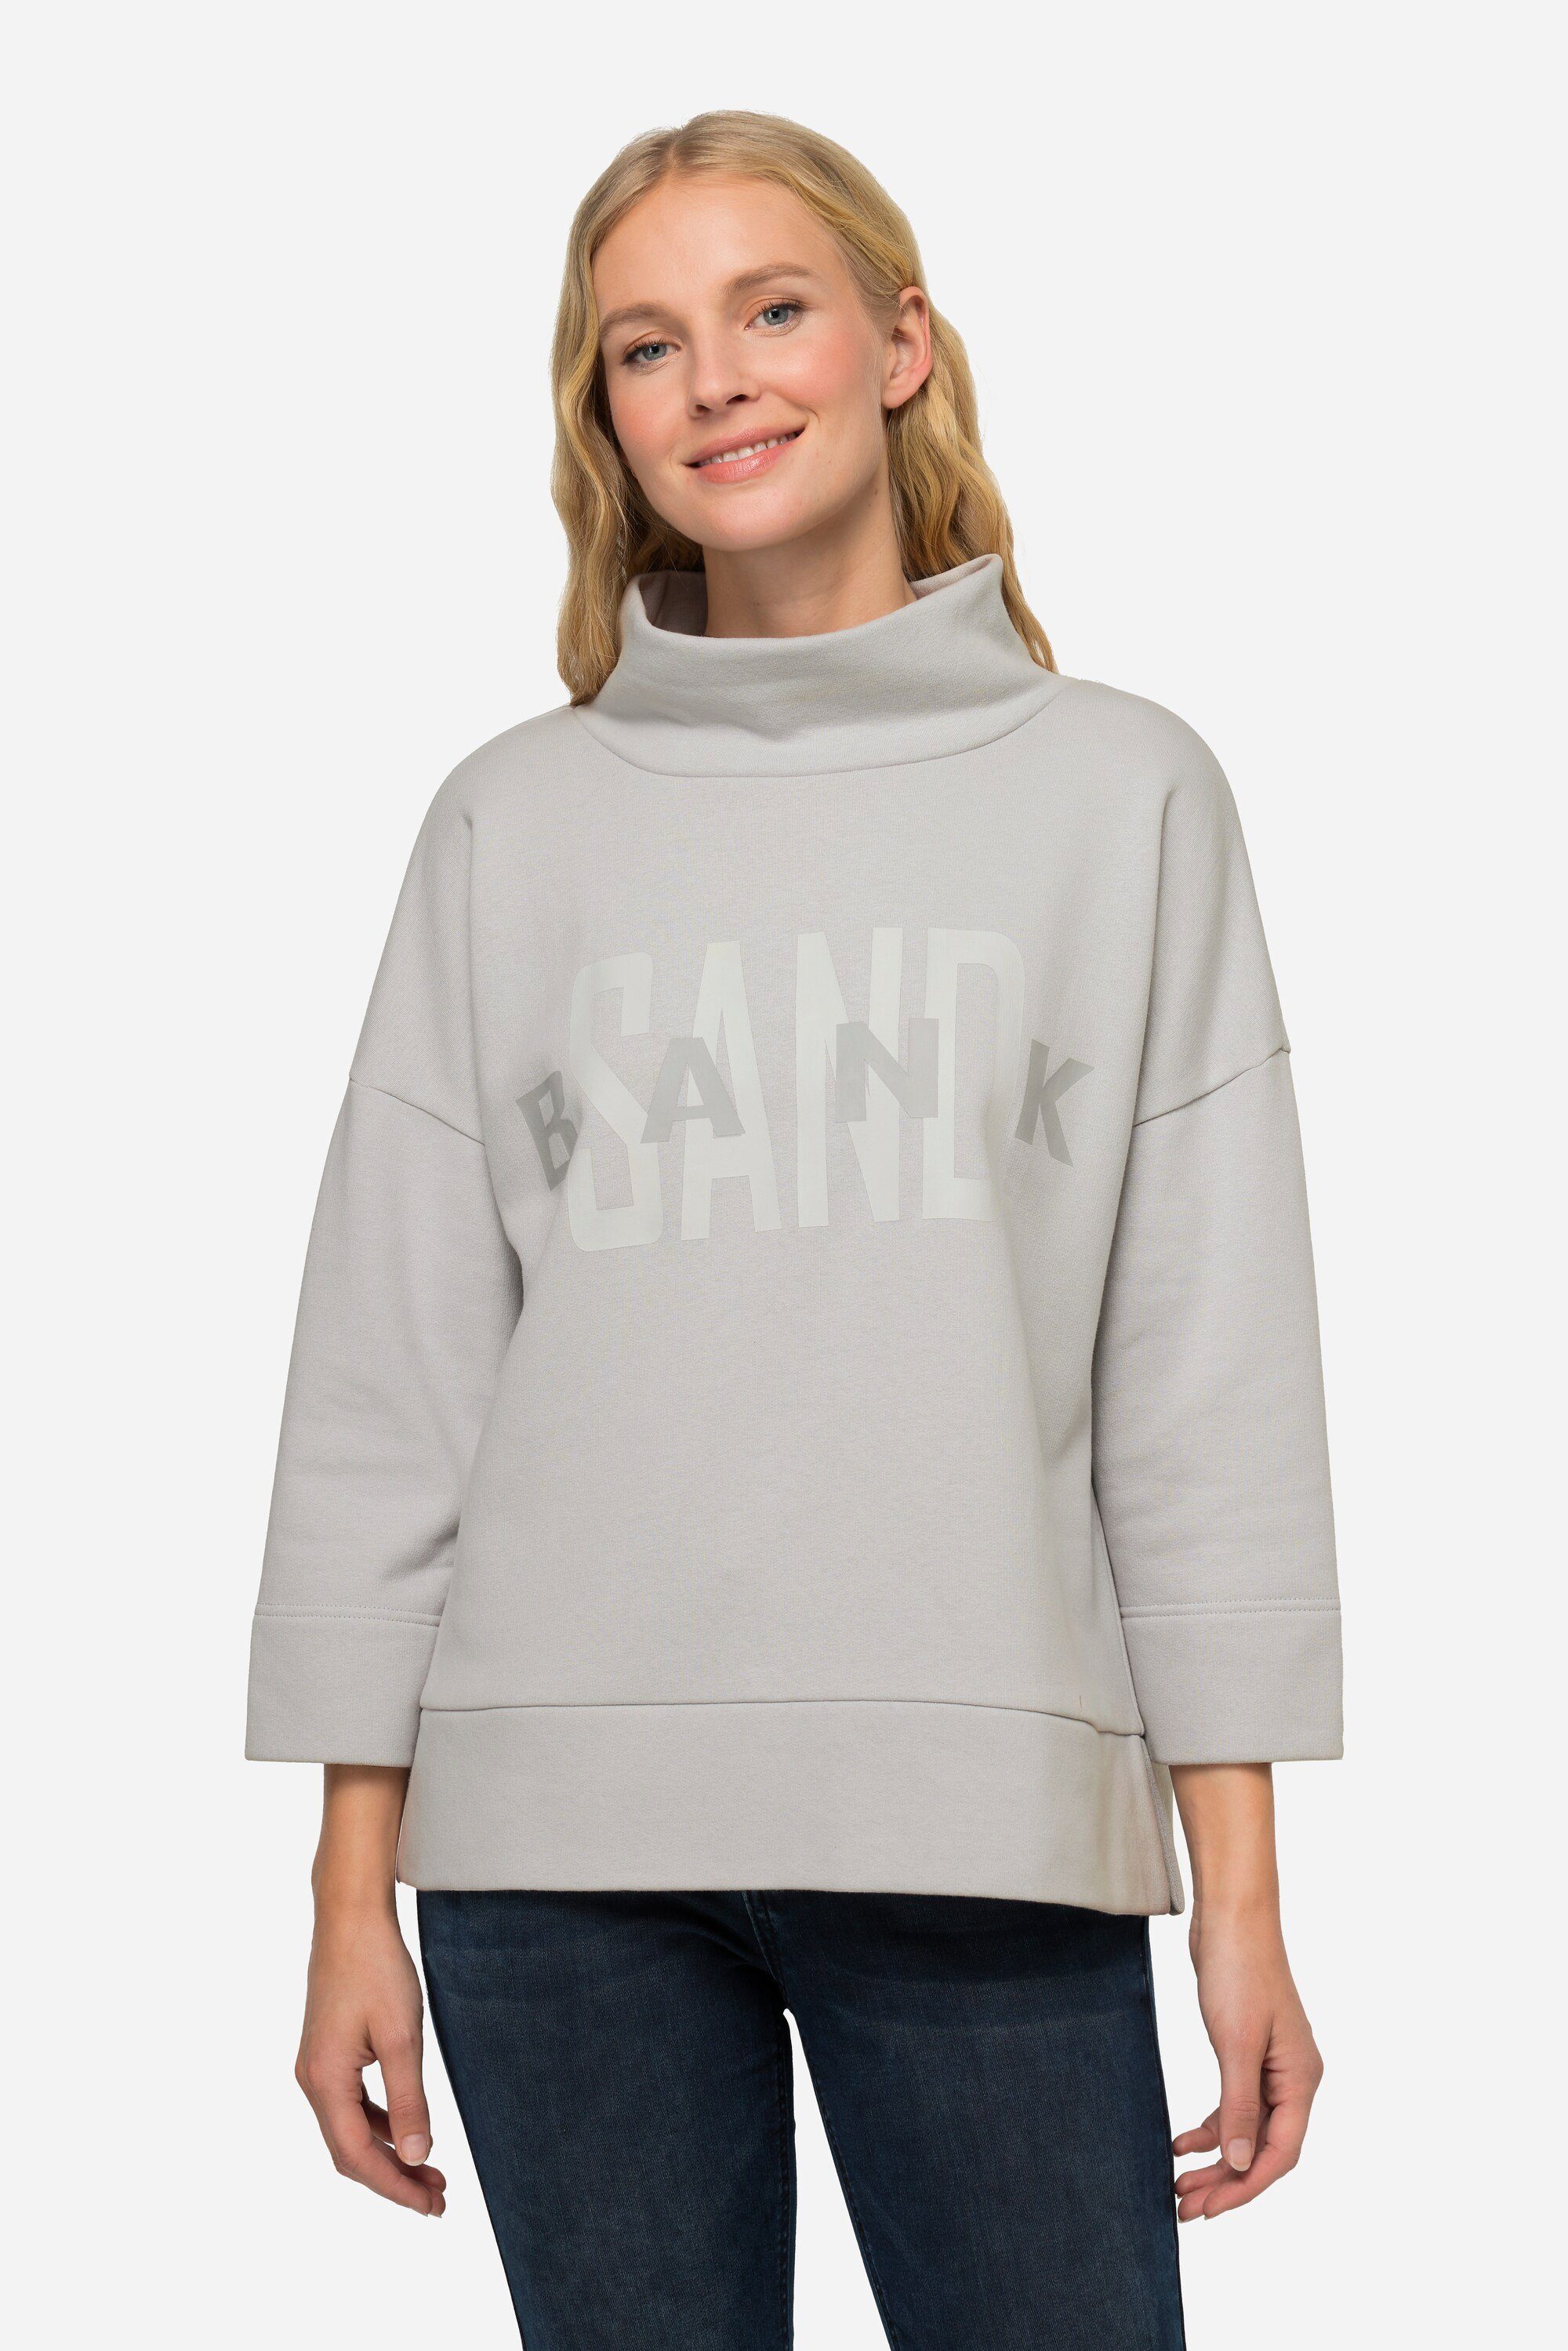 SANDBANK-Druck Stehkragen Laurasøn Sweatshirt Sweatshirt oversized